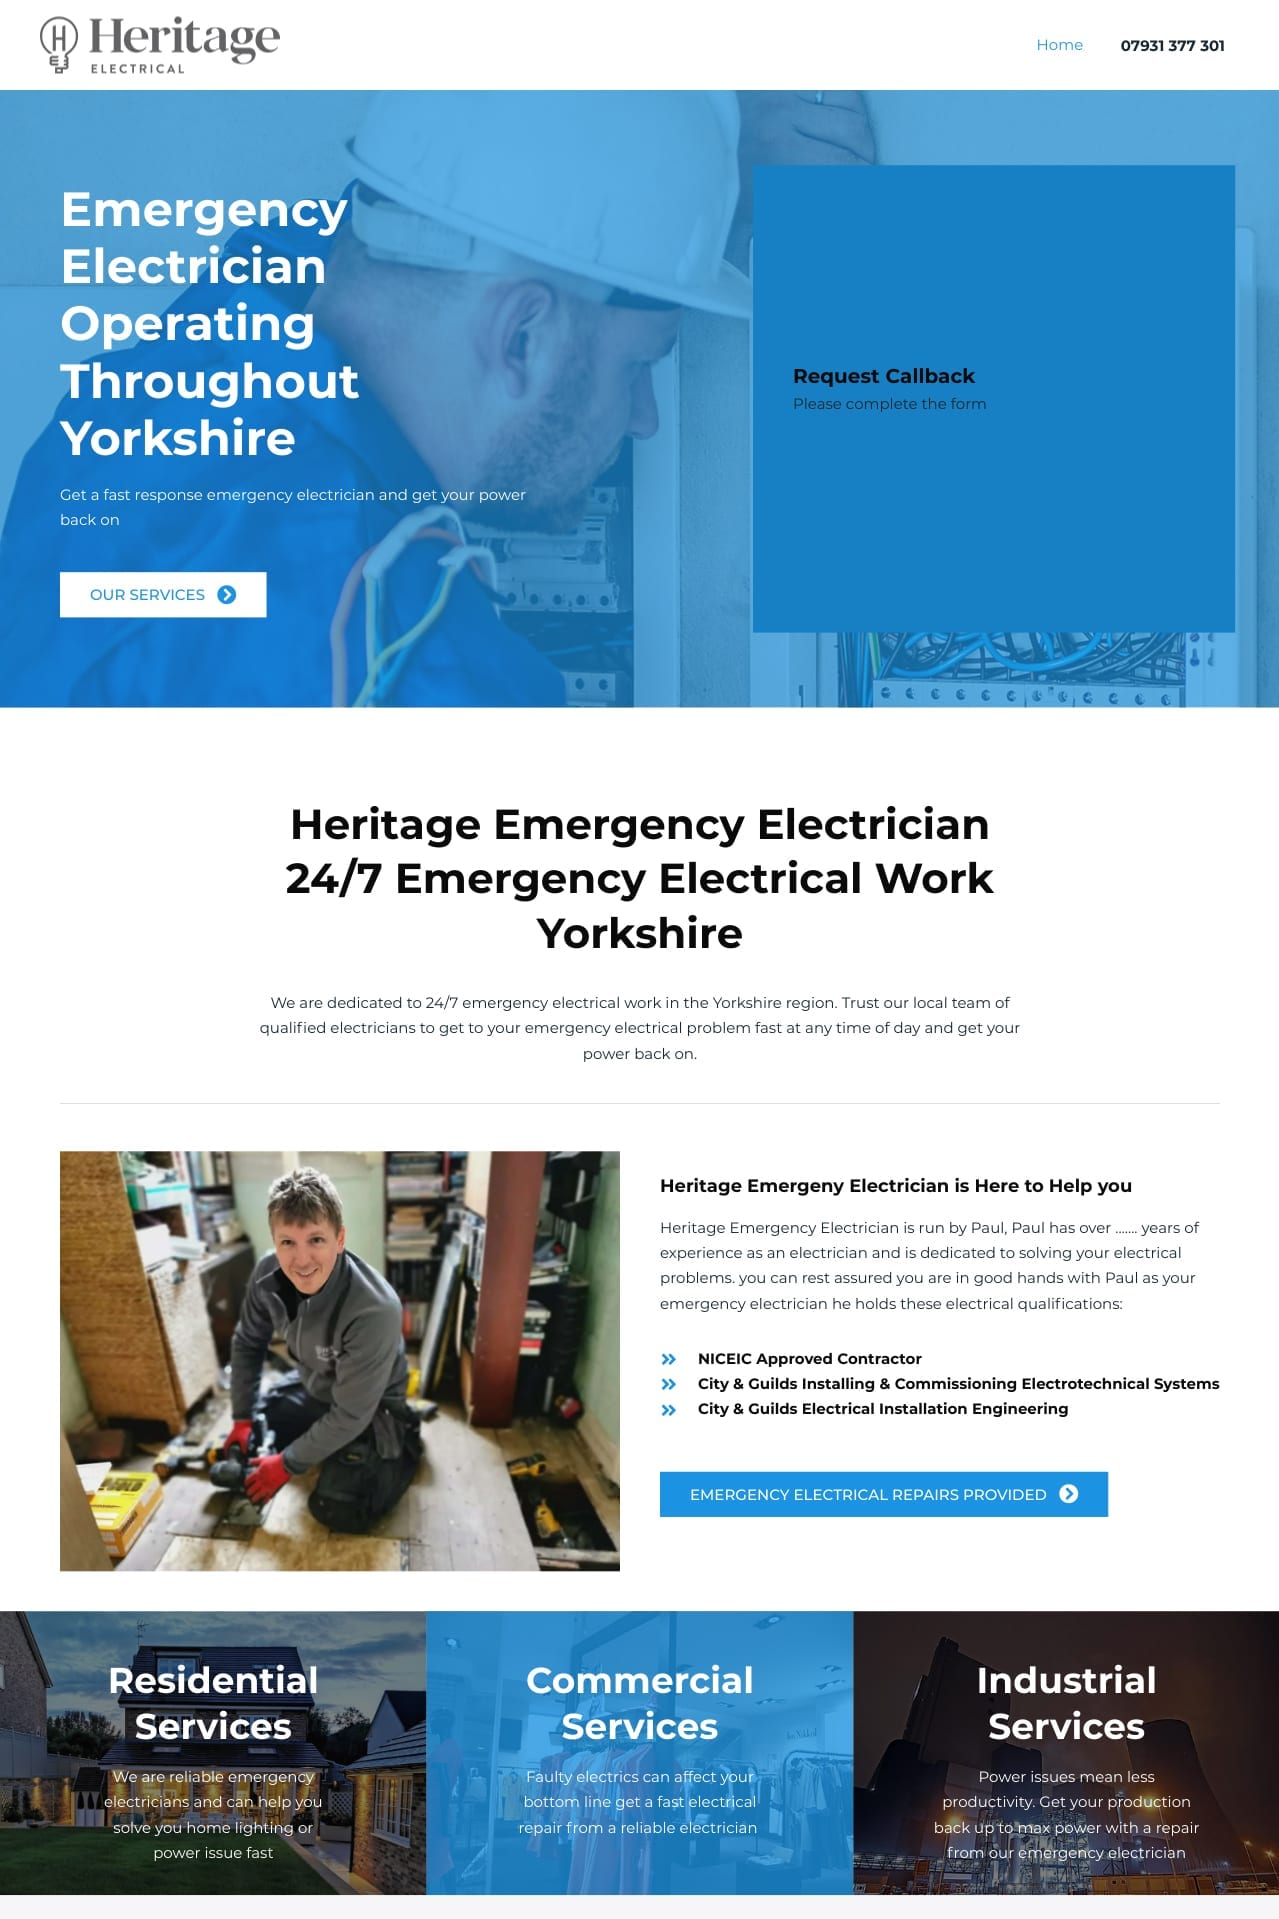 Heritage Emergency Electrician's website in Holmfirth, Huddersfield